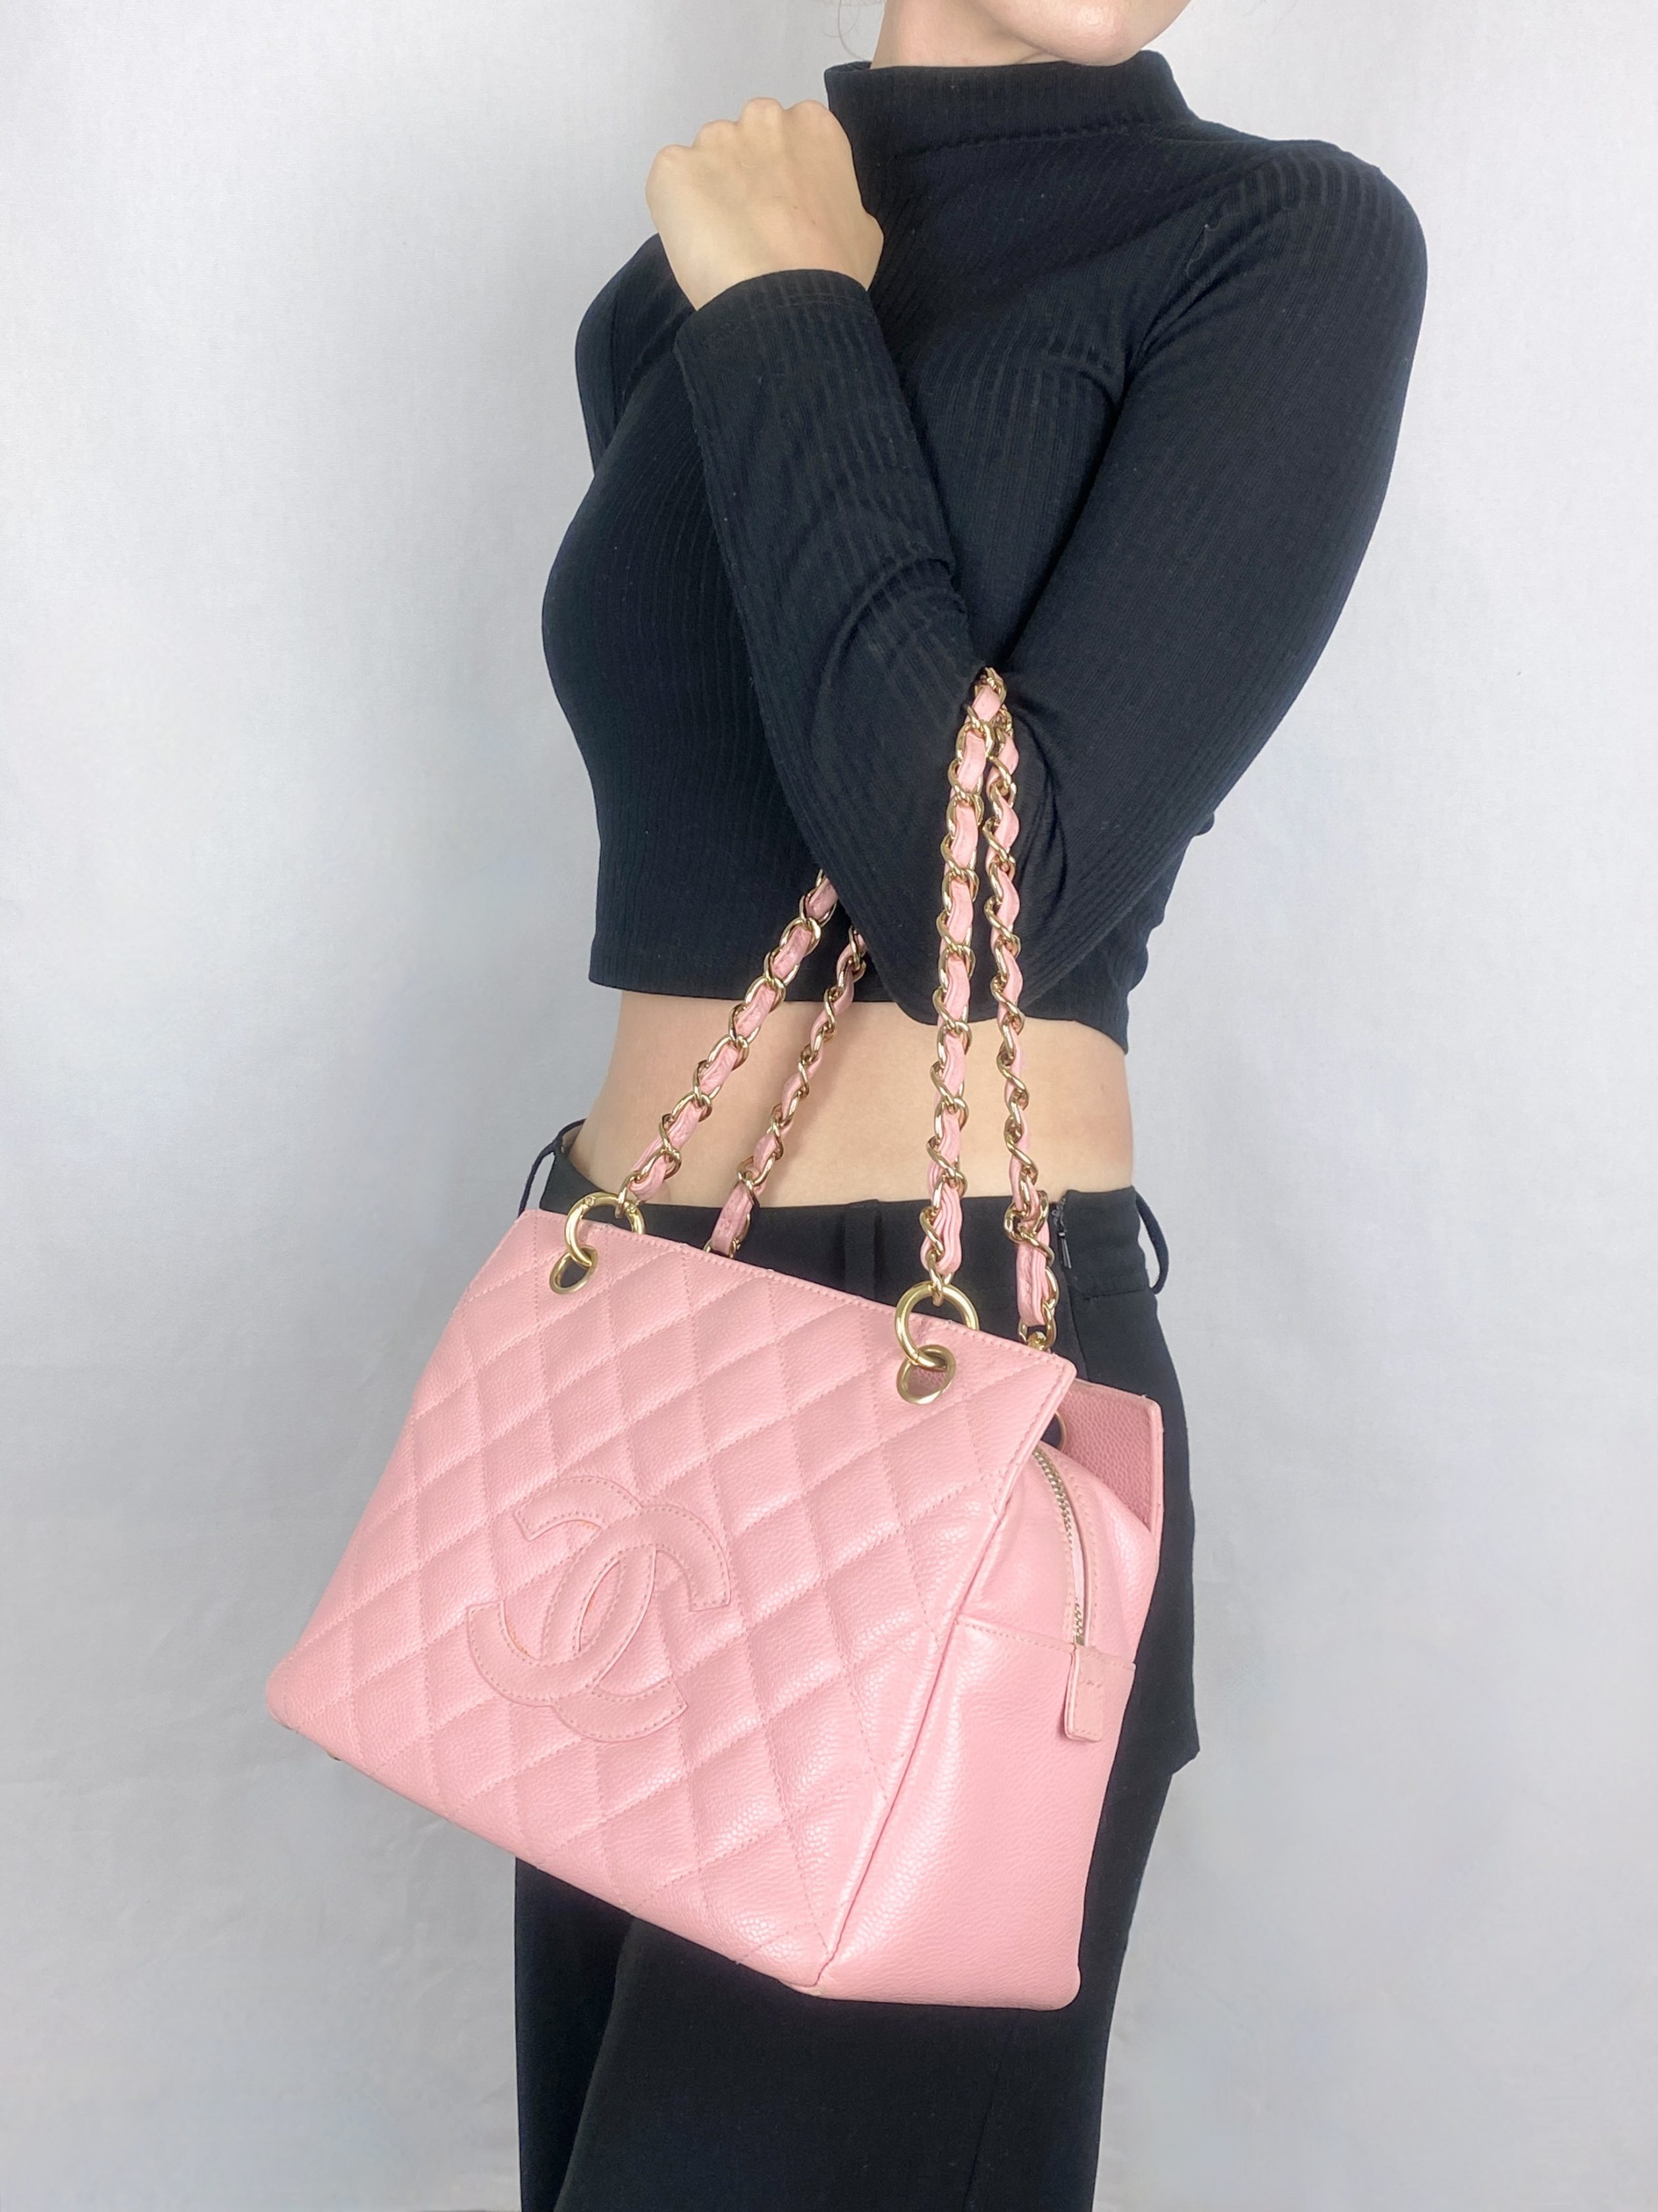 Chanel Pink Caviar Petite Timeless Shopper Tote PTT Bag 24k GHW